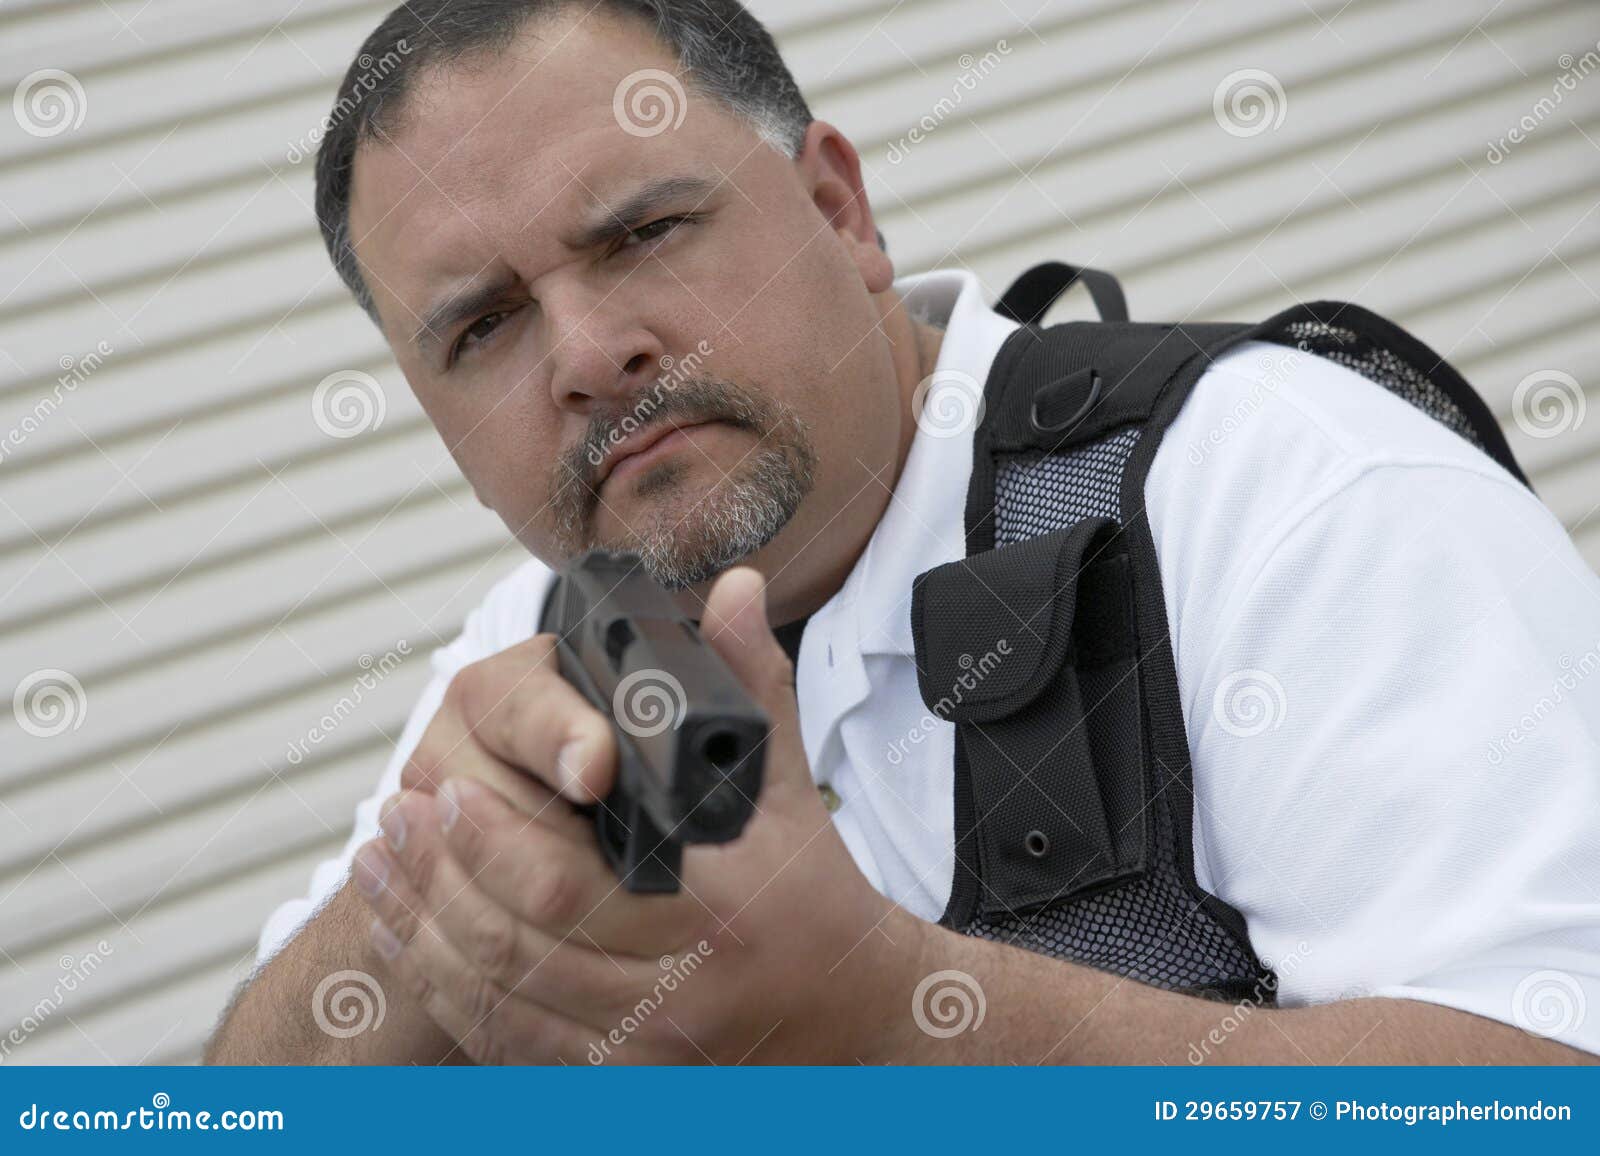 security guard in bulletproof vest holding gun